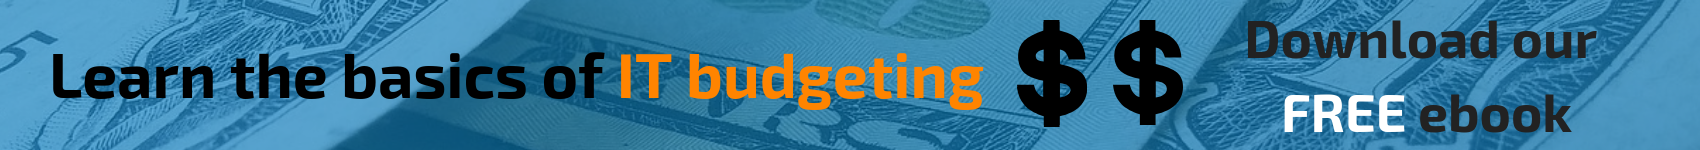 Budget Ebook banner